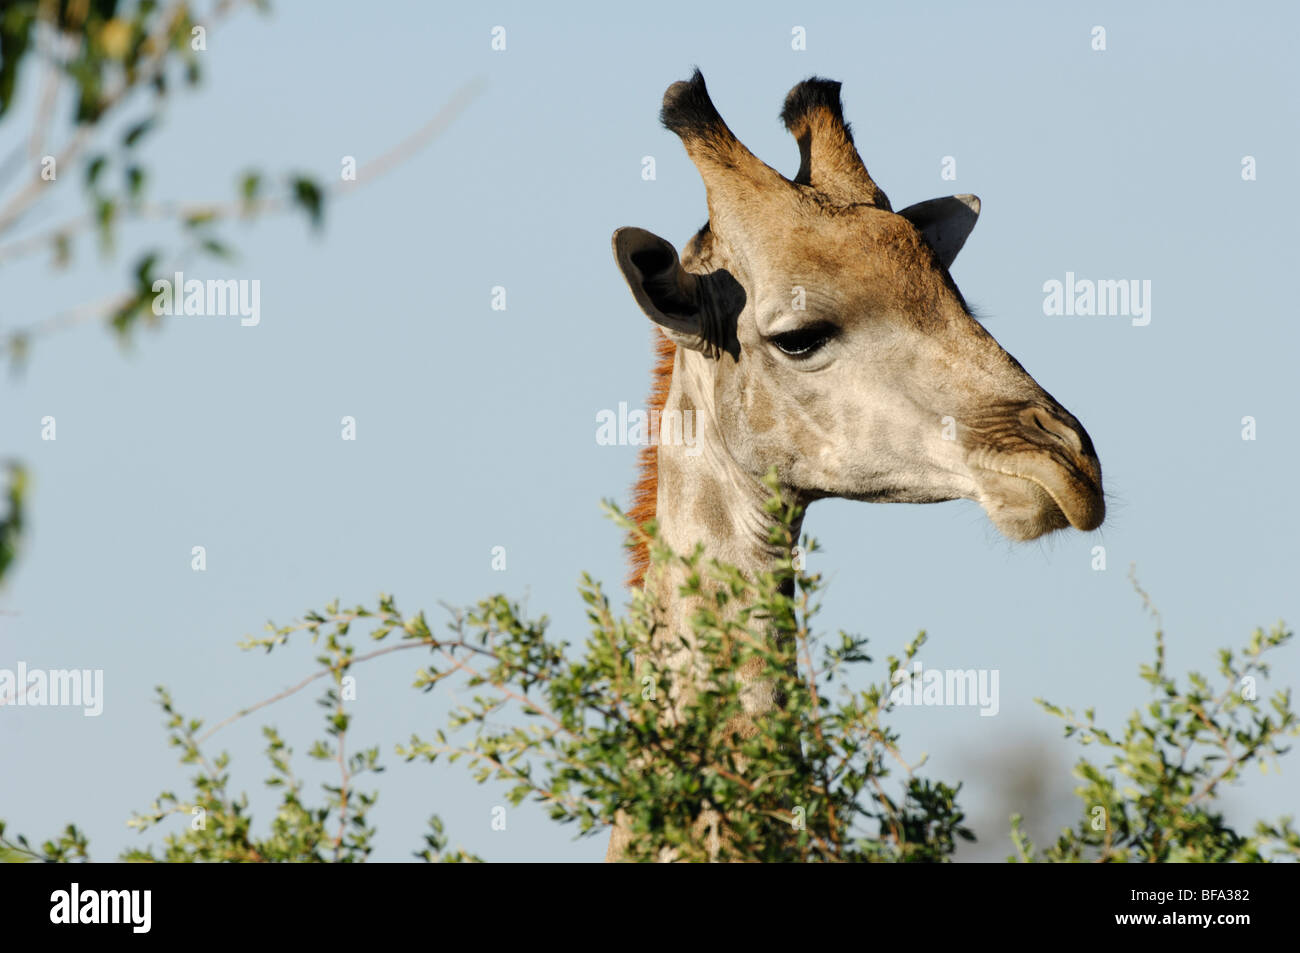 Stock photo of a giraffe peering over the top of an acacia tree, Okavango Delta, Botswana. Stock Photo